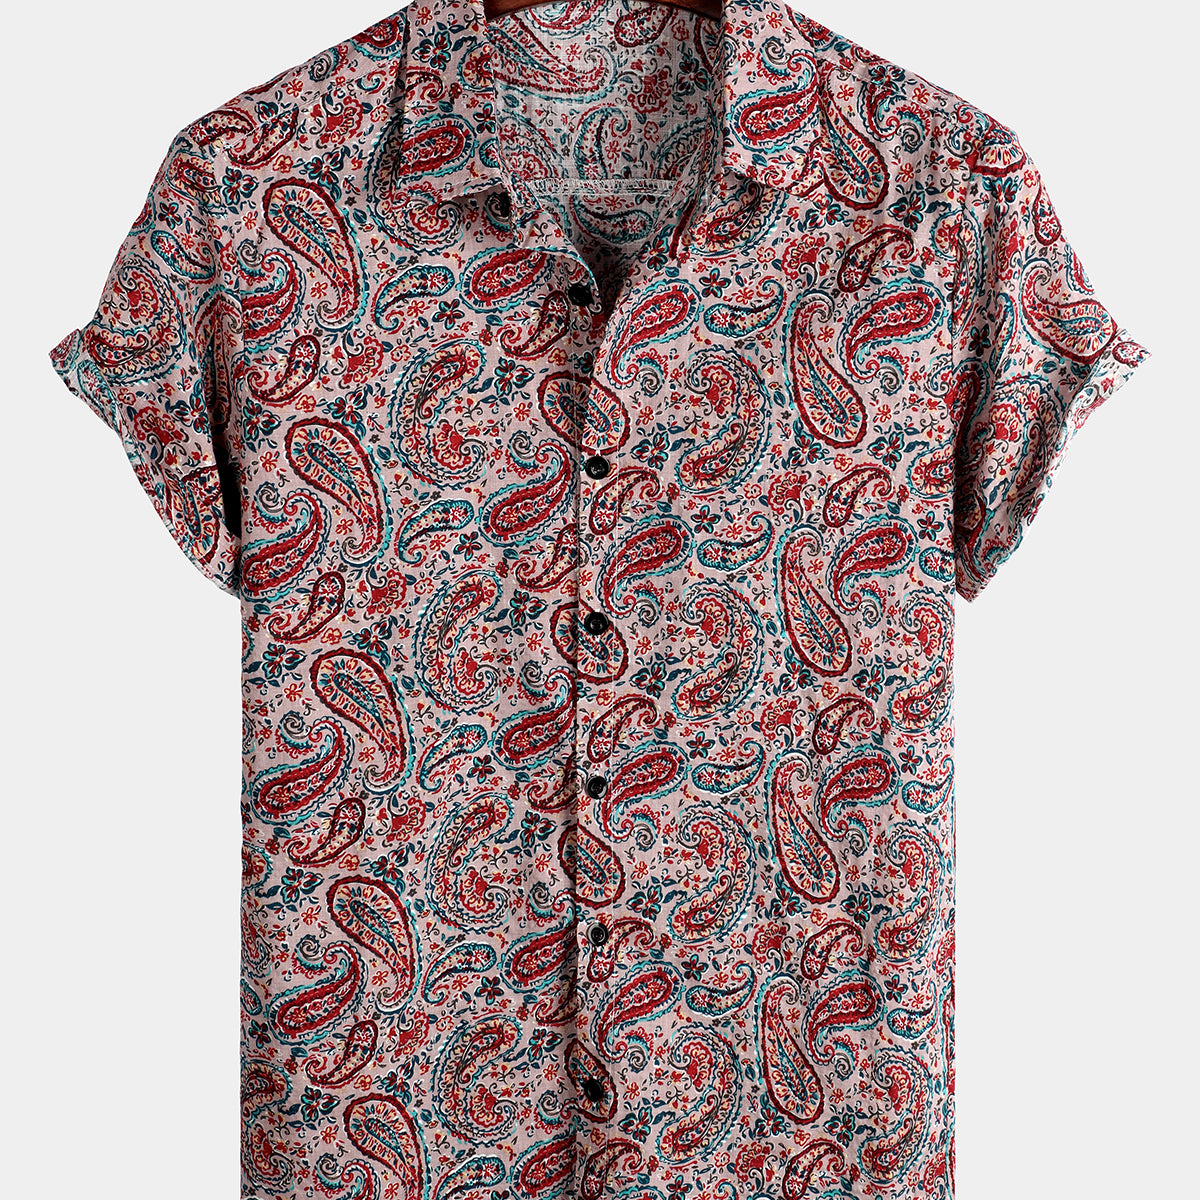 Men's Classic Paisley Print Cotton Shirt